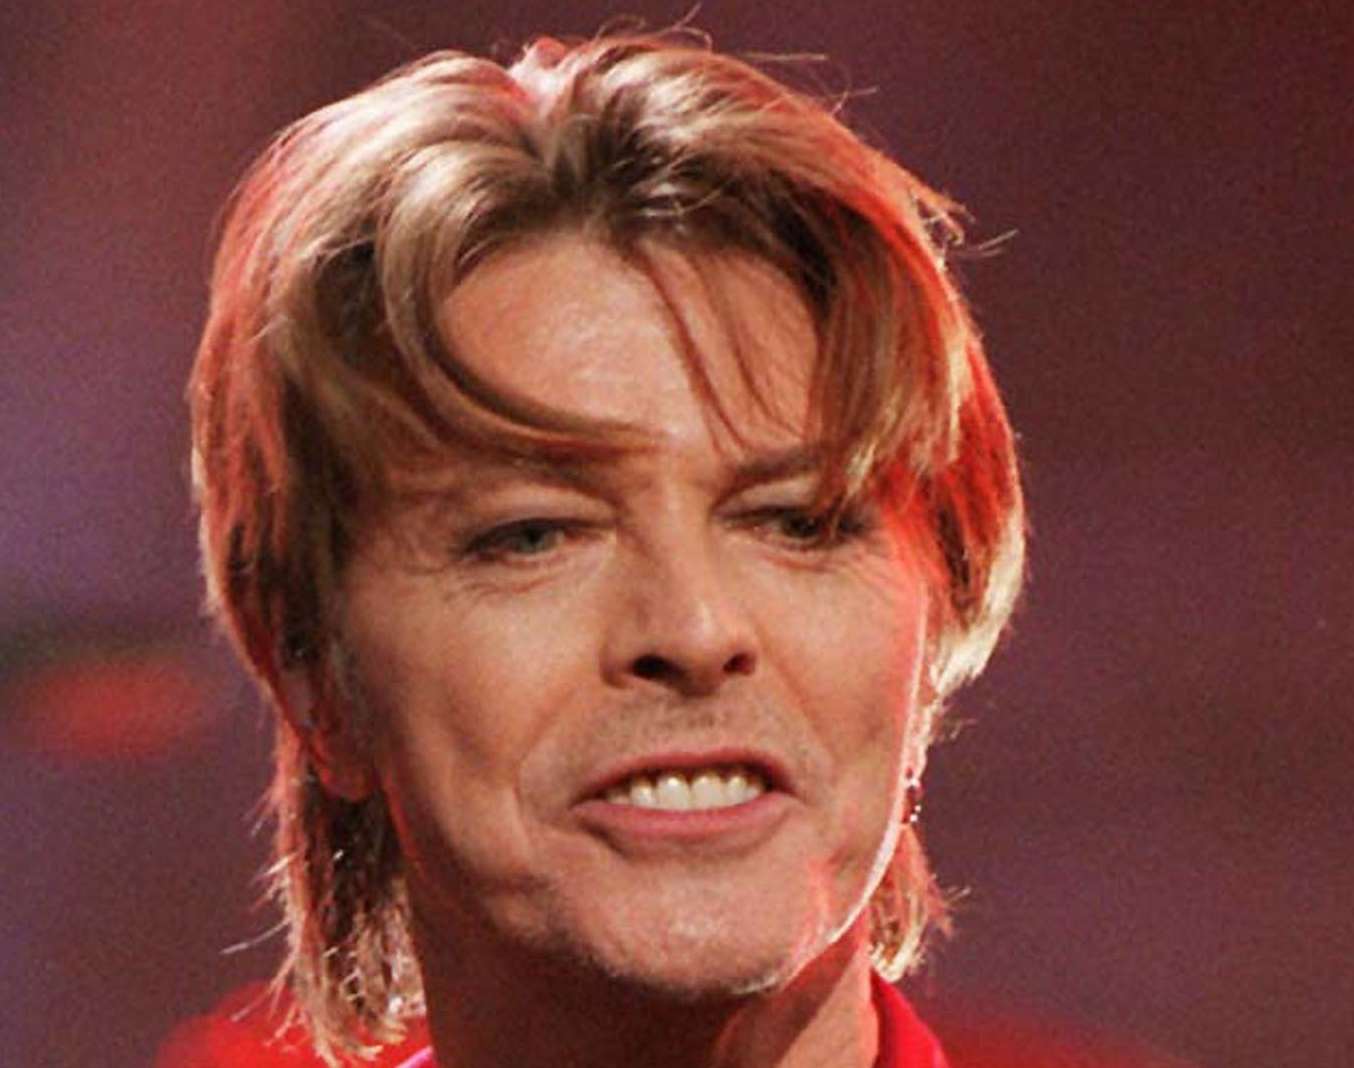 David Bowie. Picture credit: PA Photos